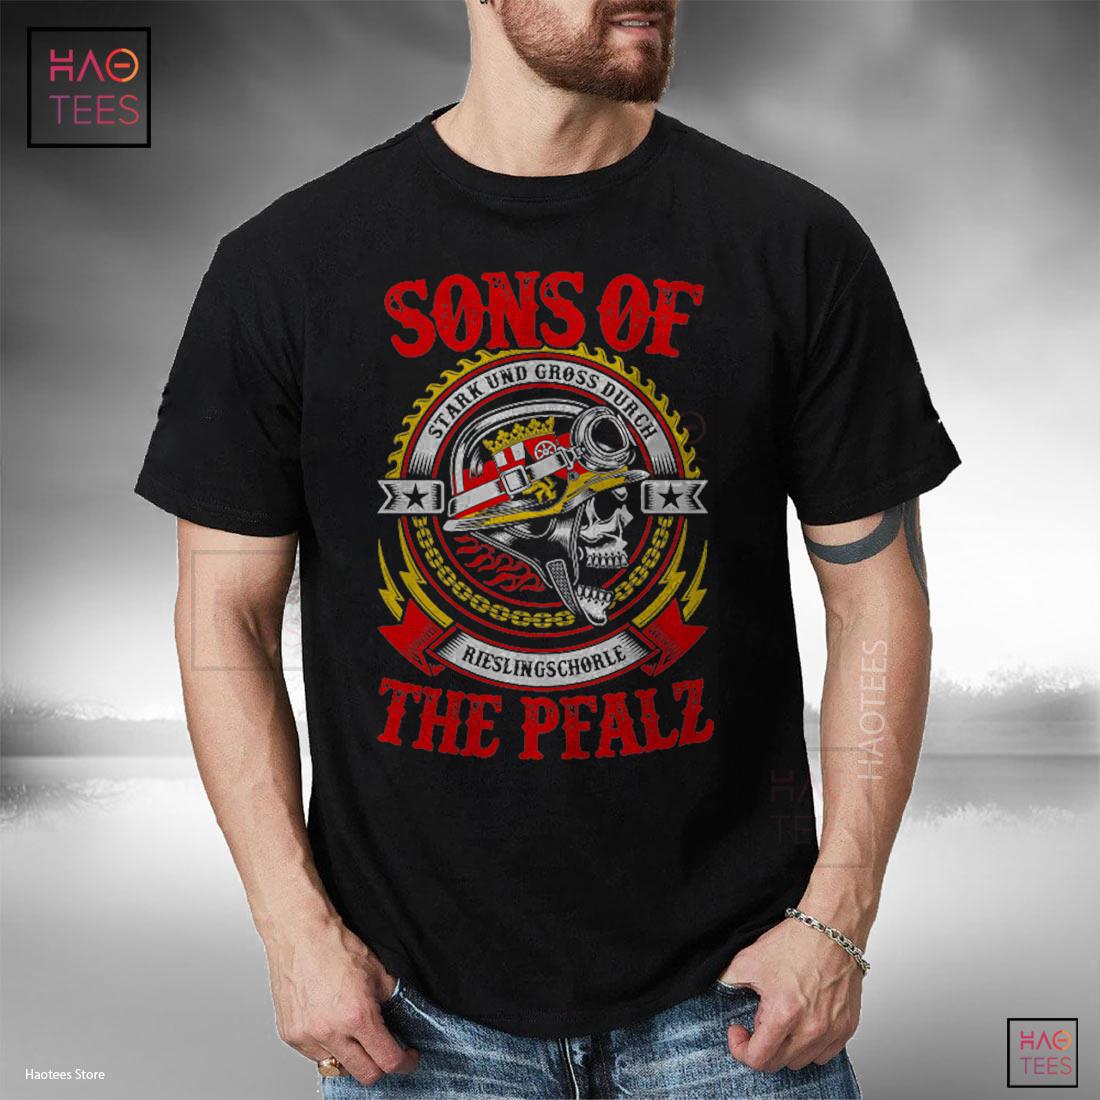 Sons Of Stark Und Gross Durch Rieslingschorle The Pfalz Shirts